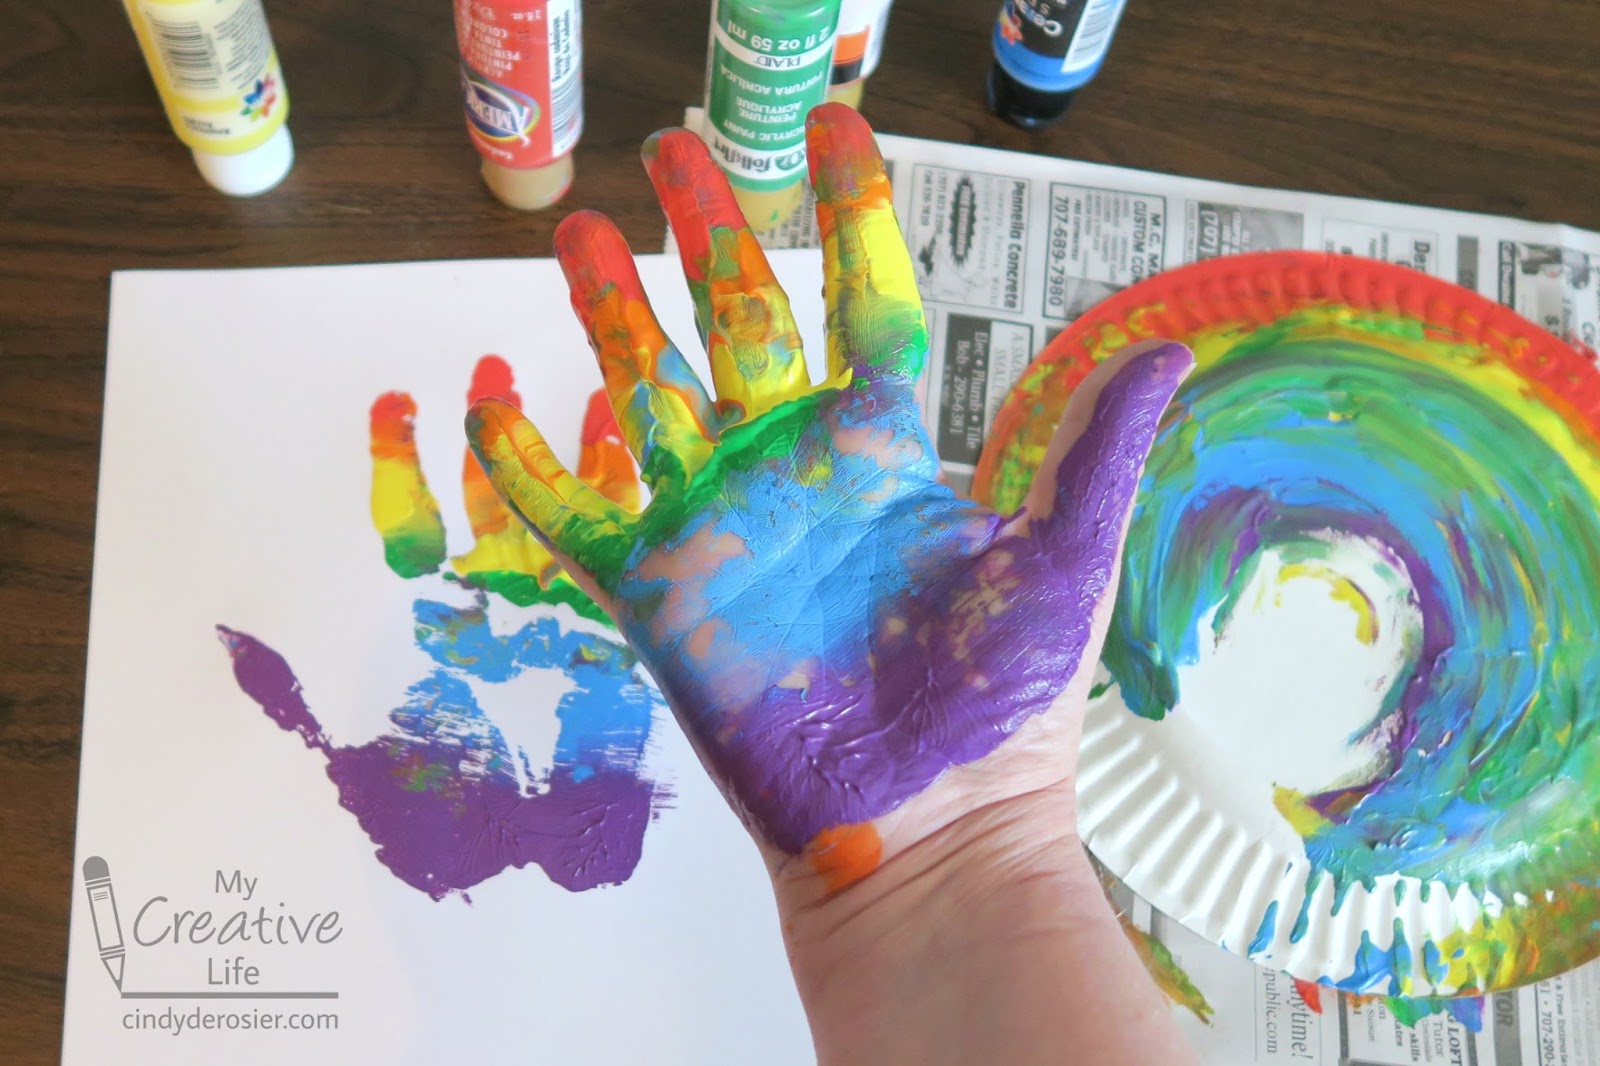 Rainbow Dash Handprint Craft - Fun Handprint Art